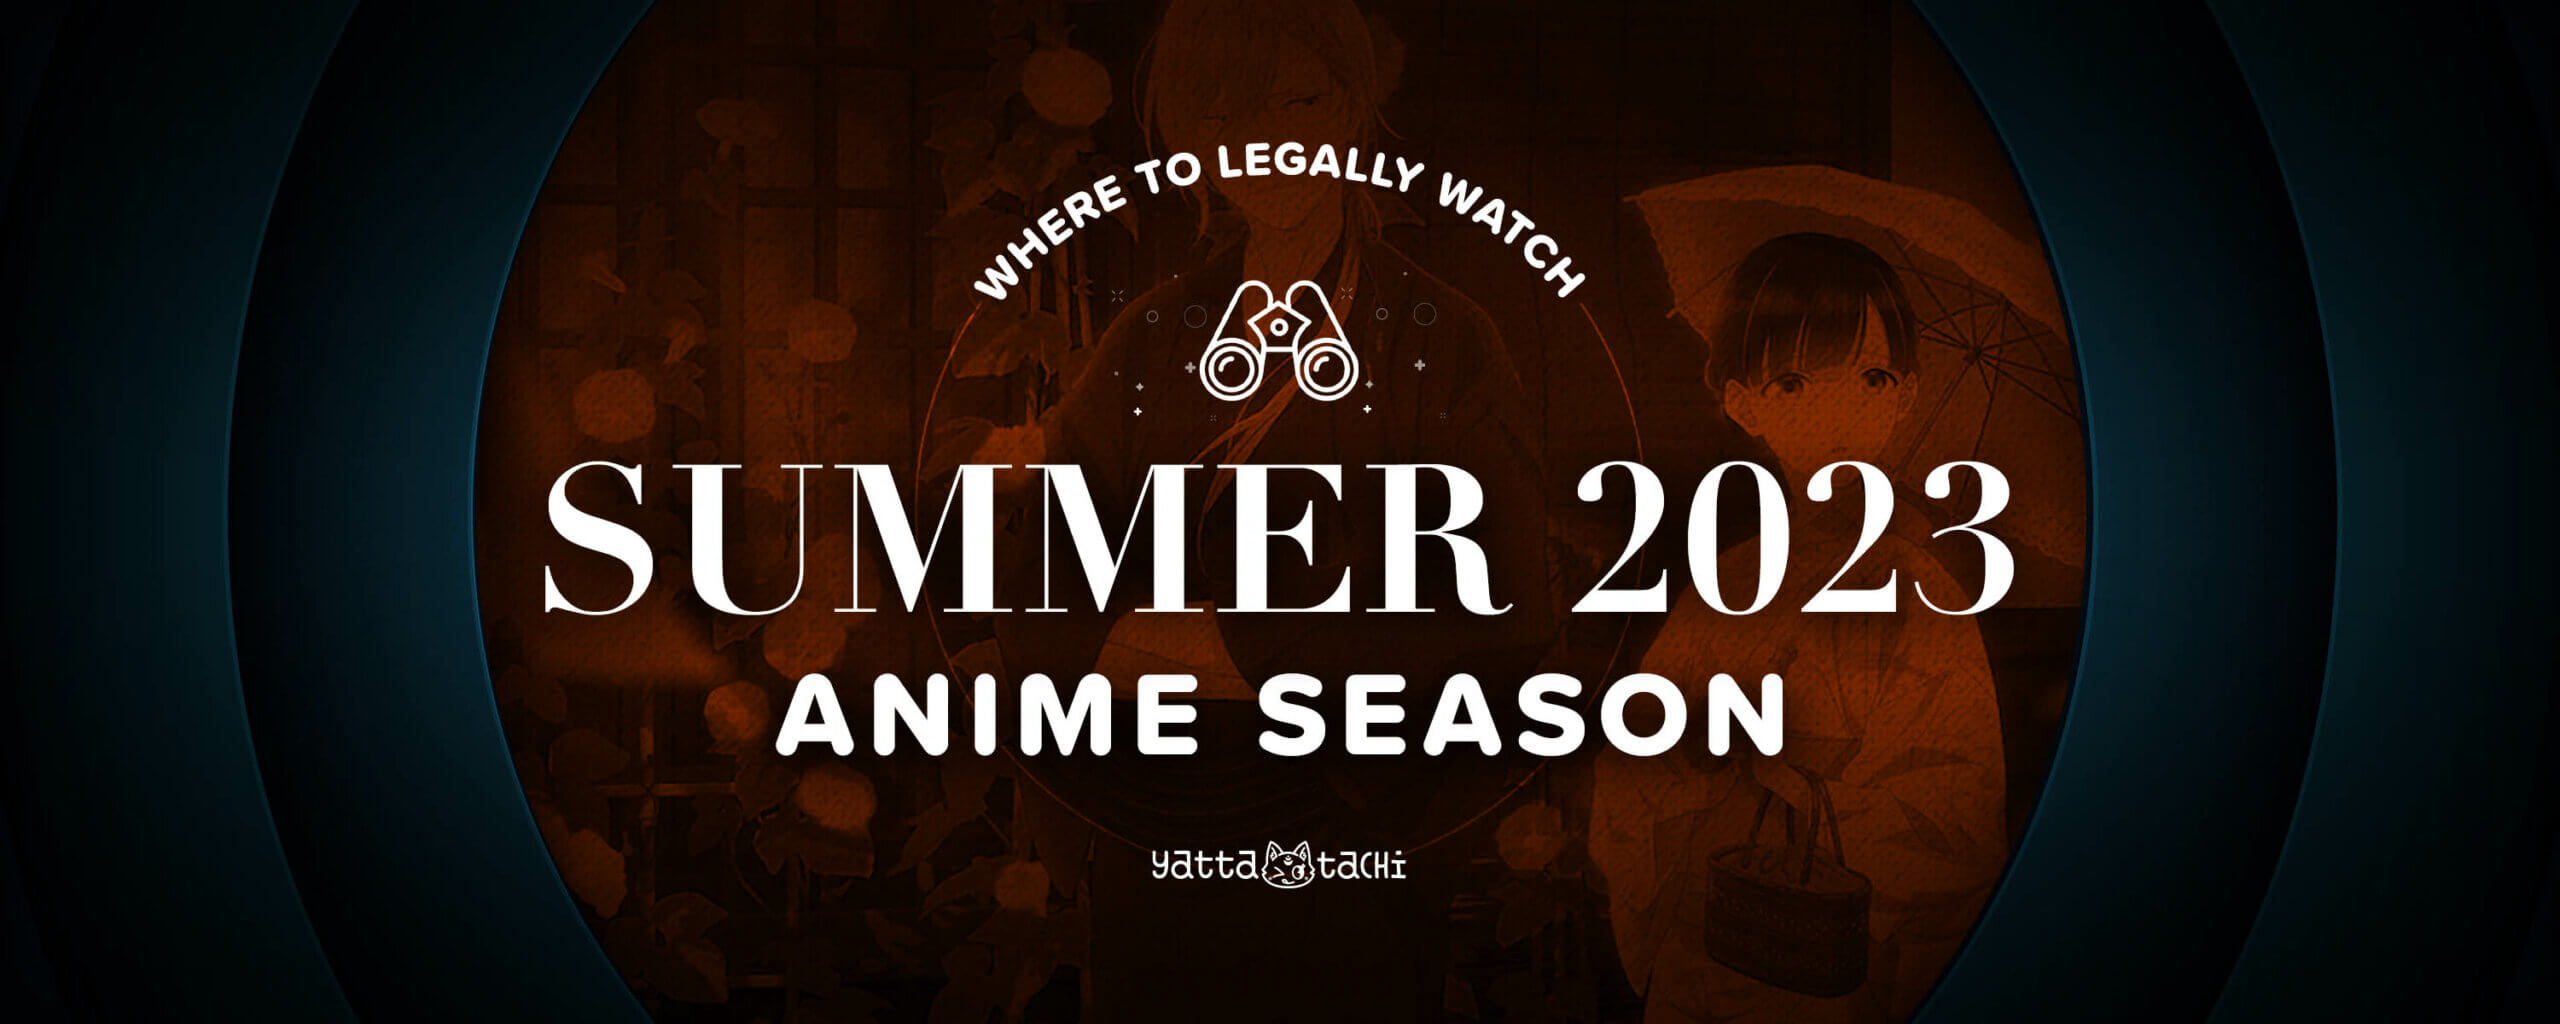 Crunchyroll Summer 2023 Anime Series Include Atelier Ryza, Fate